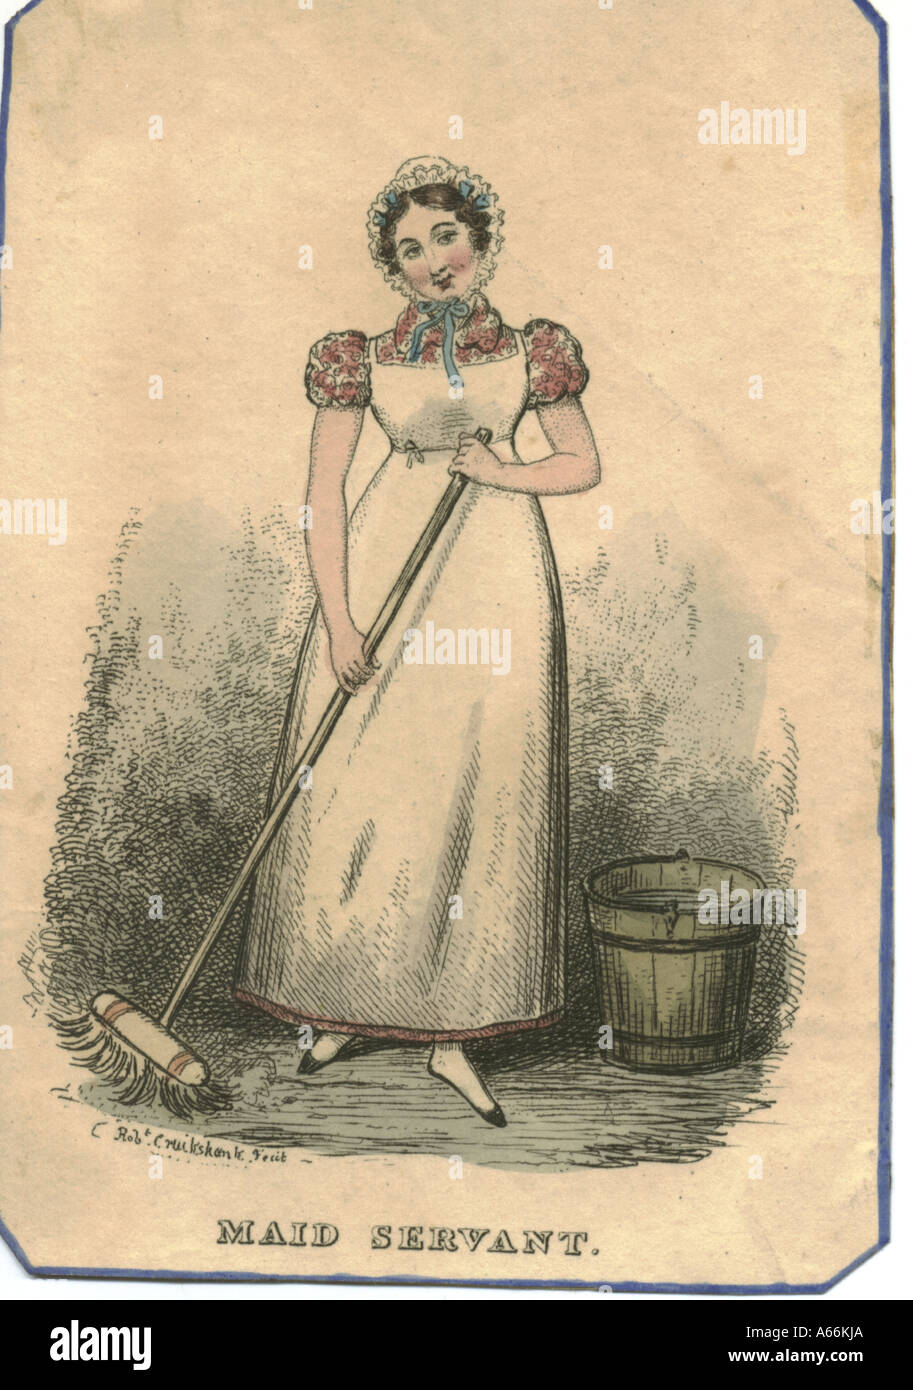 Maid Servant circa 1830 by Robert Cruikshank Stock Photo